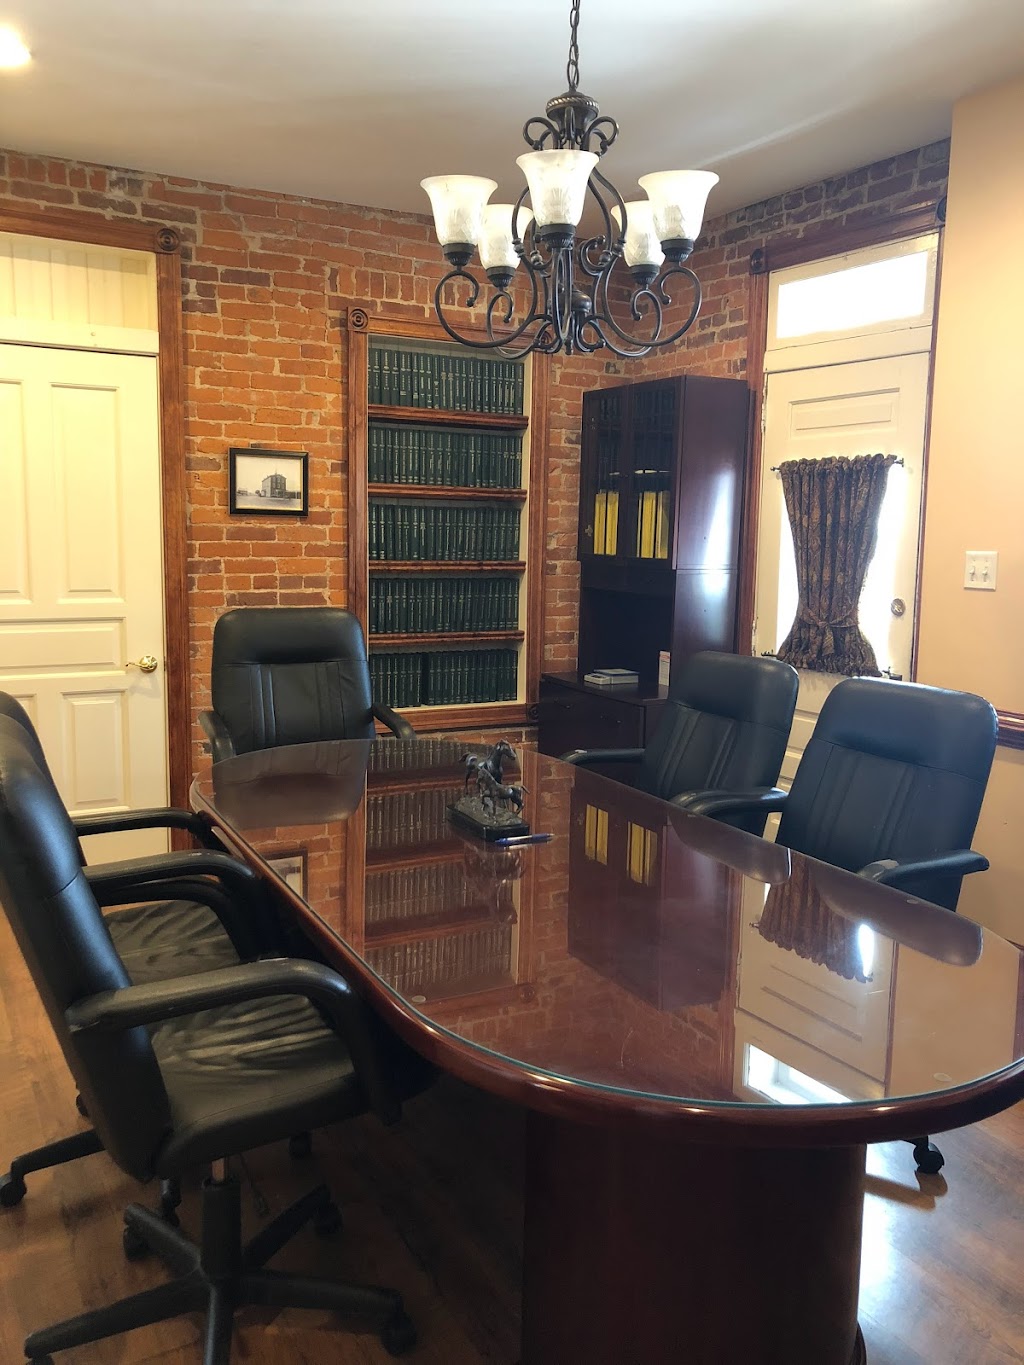 Law Offices of V. Erik Petersen | 878 Main St, Harleysville, PA 19438 | Phone: (215) 513-1700